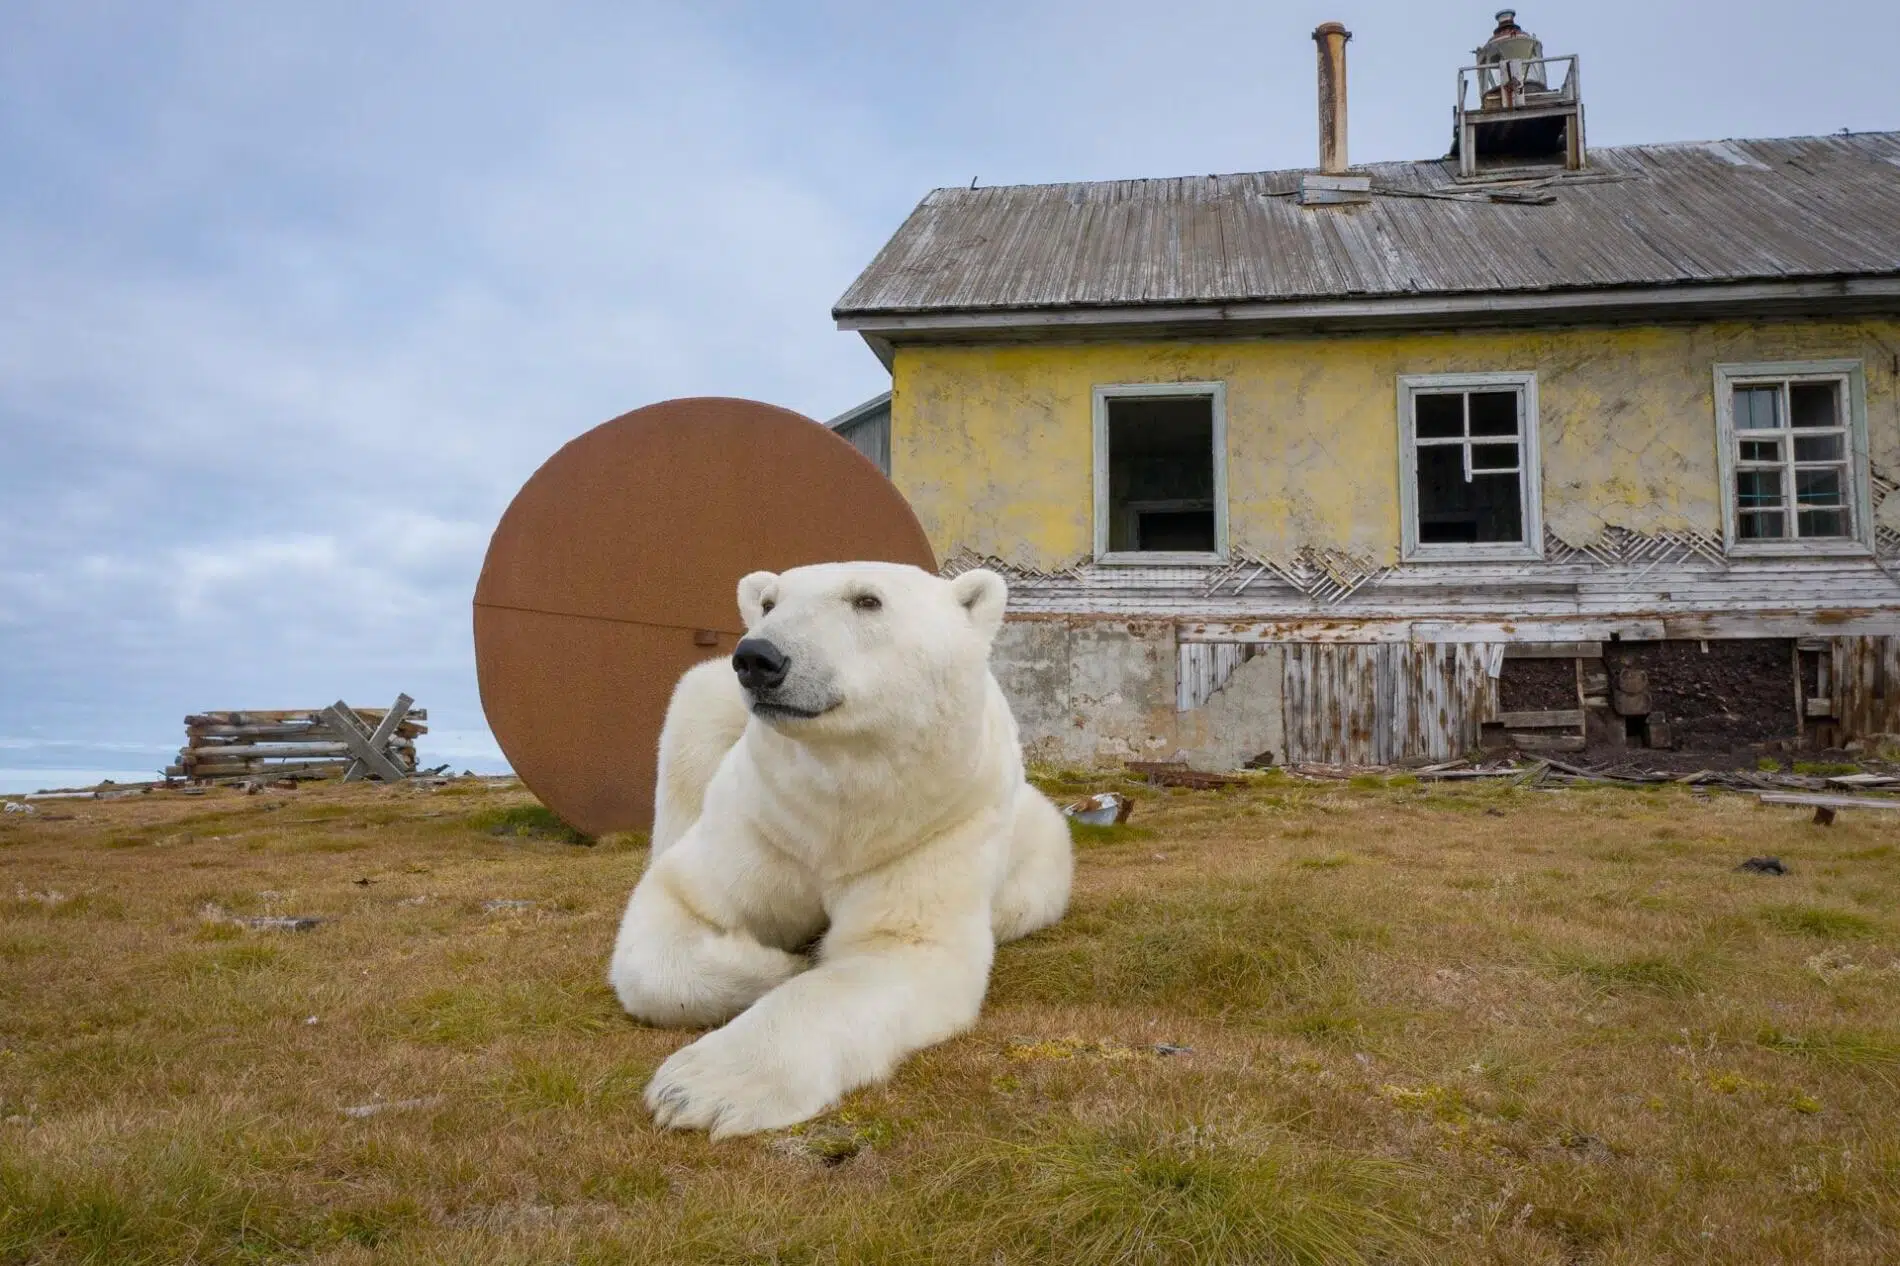 fotografia documental vida salvaje, osos polares Dmitry Kokh serie fotográfica